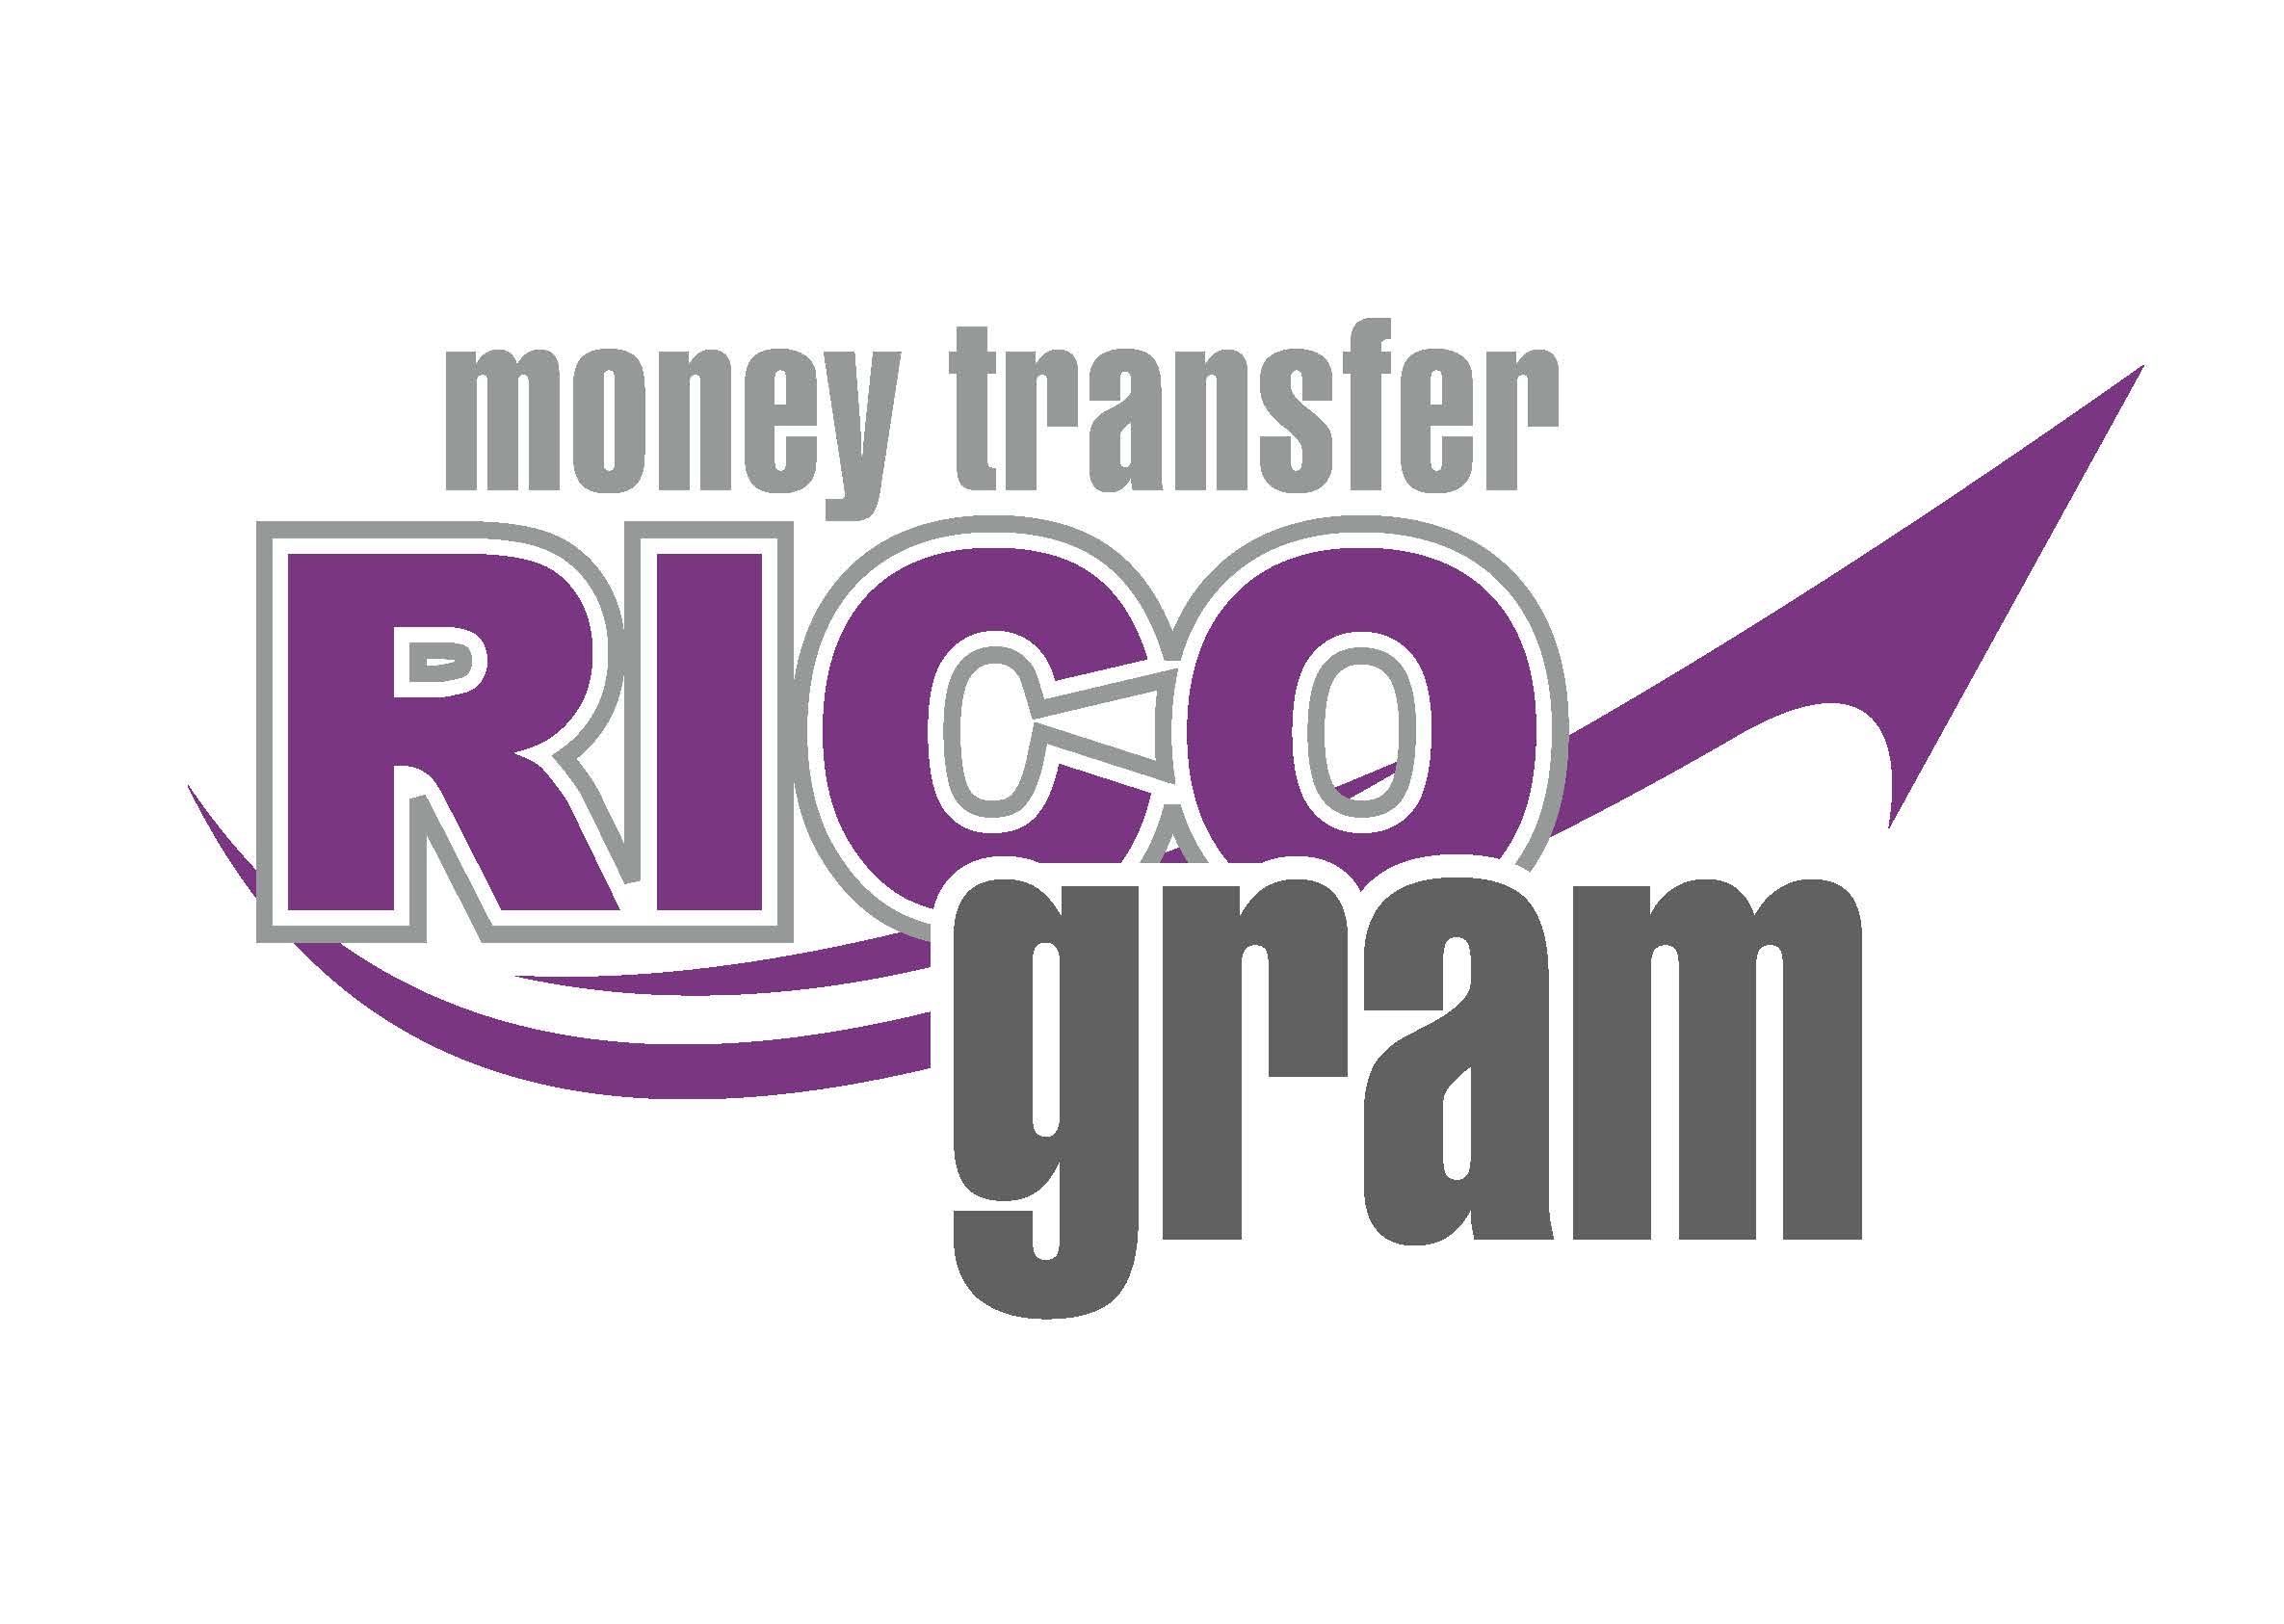 Rico ge. Rico gram. Rico gram Bank. Компания Рико. Ricco grams.